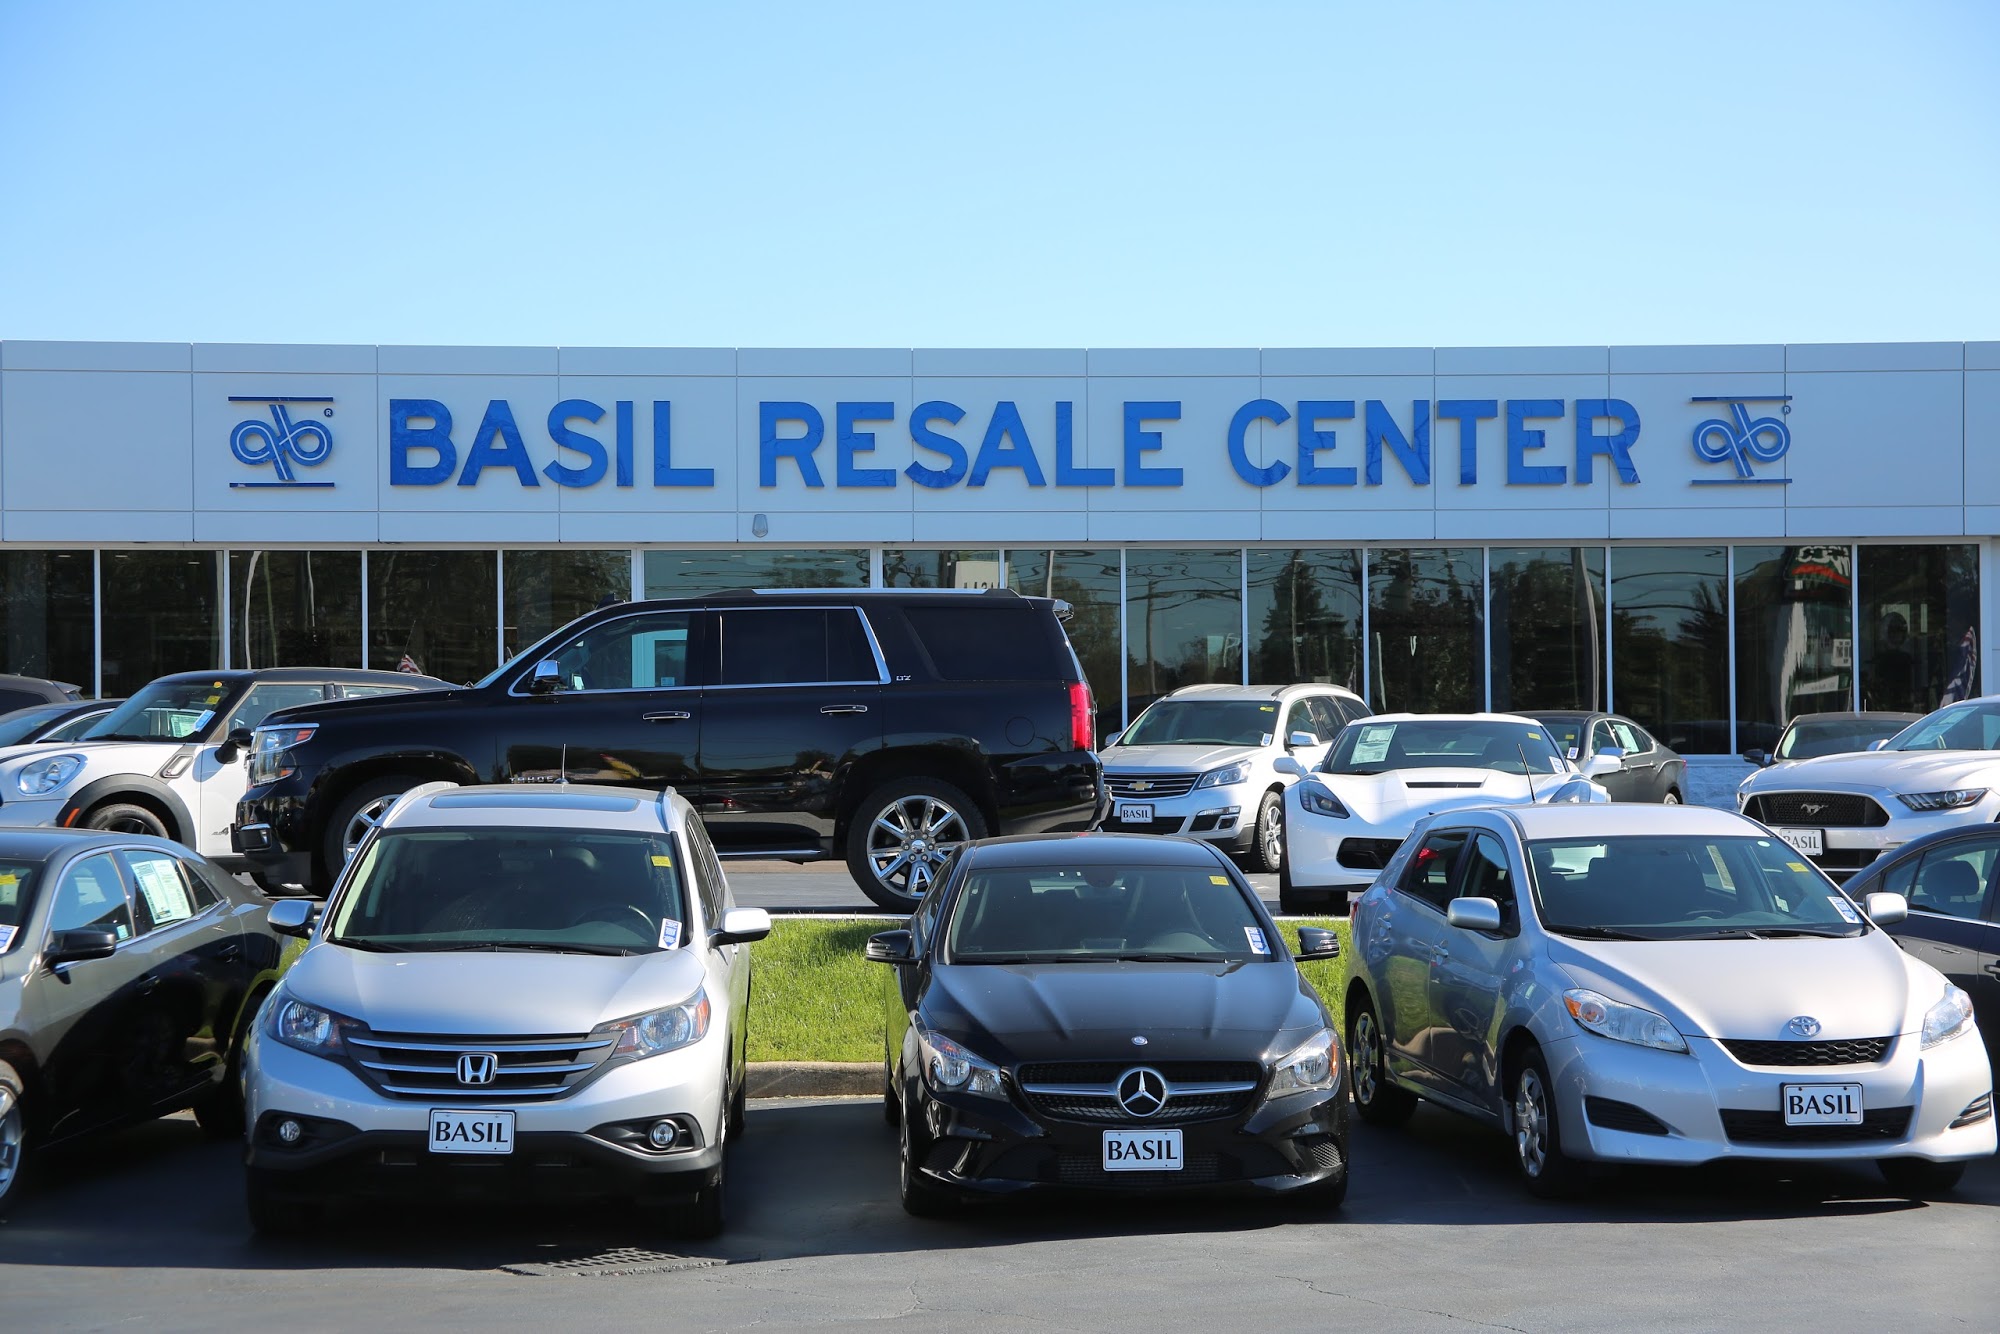 Joe Basil Resale Center